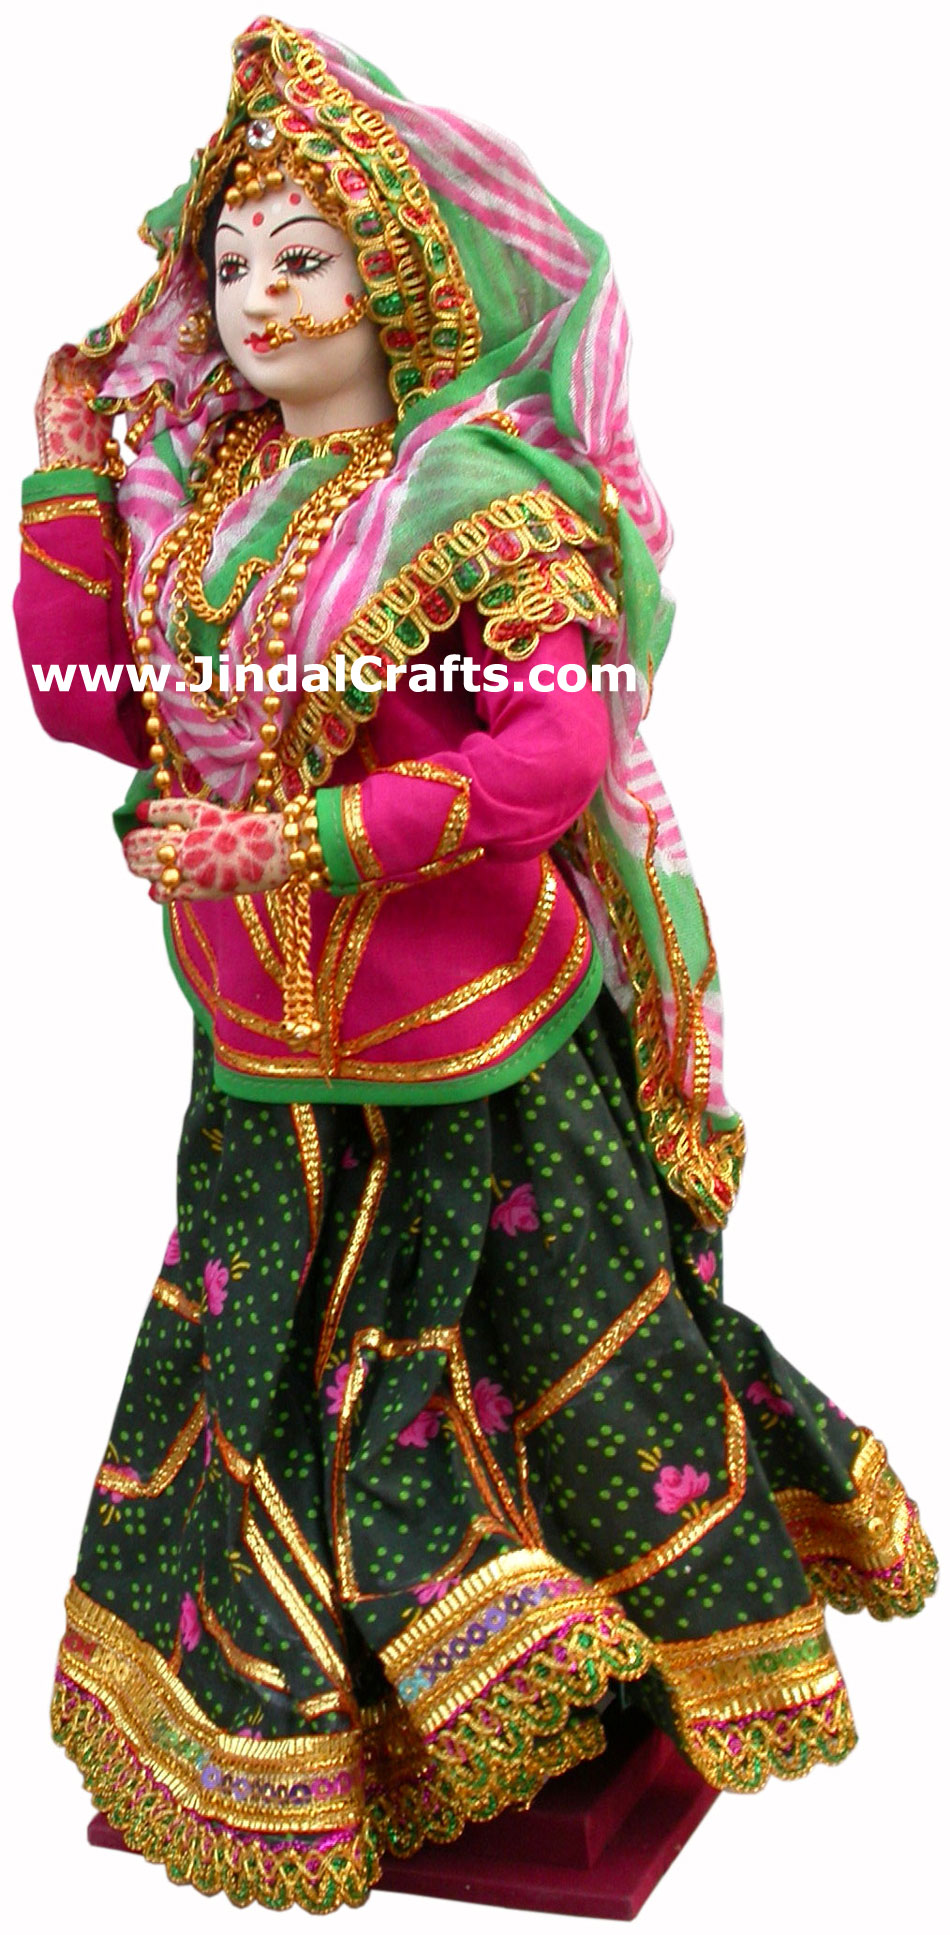 Ethnic Doll - Indian Art Craft Handicraft Traditional Figure